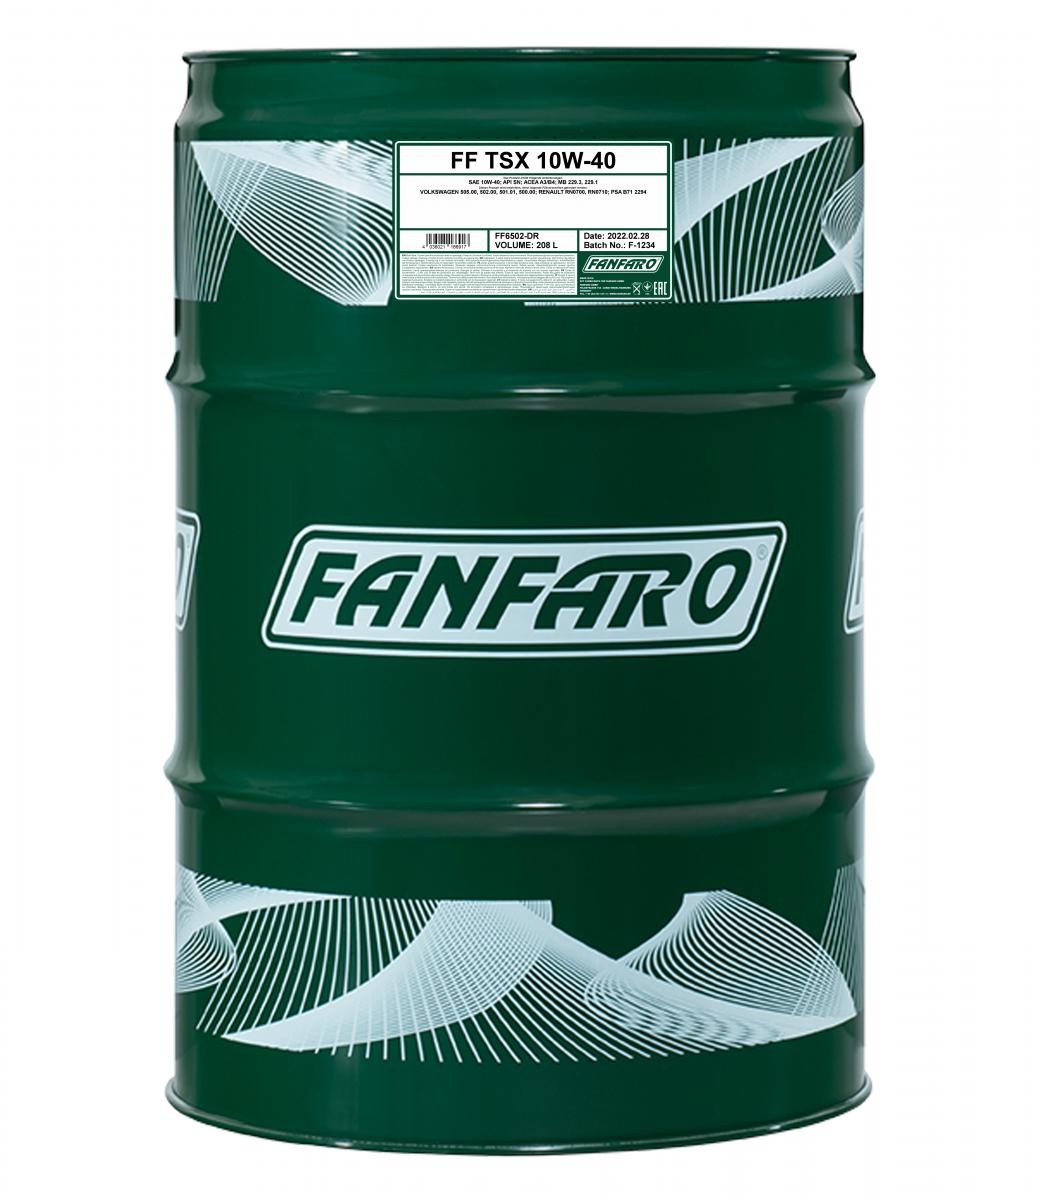 FF6502-DR FANFARO Master Line, TSX 10W-40, 208l, Teilsynthetiköl Motoröl FF6502-DR günstig kaufen